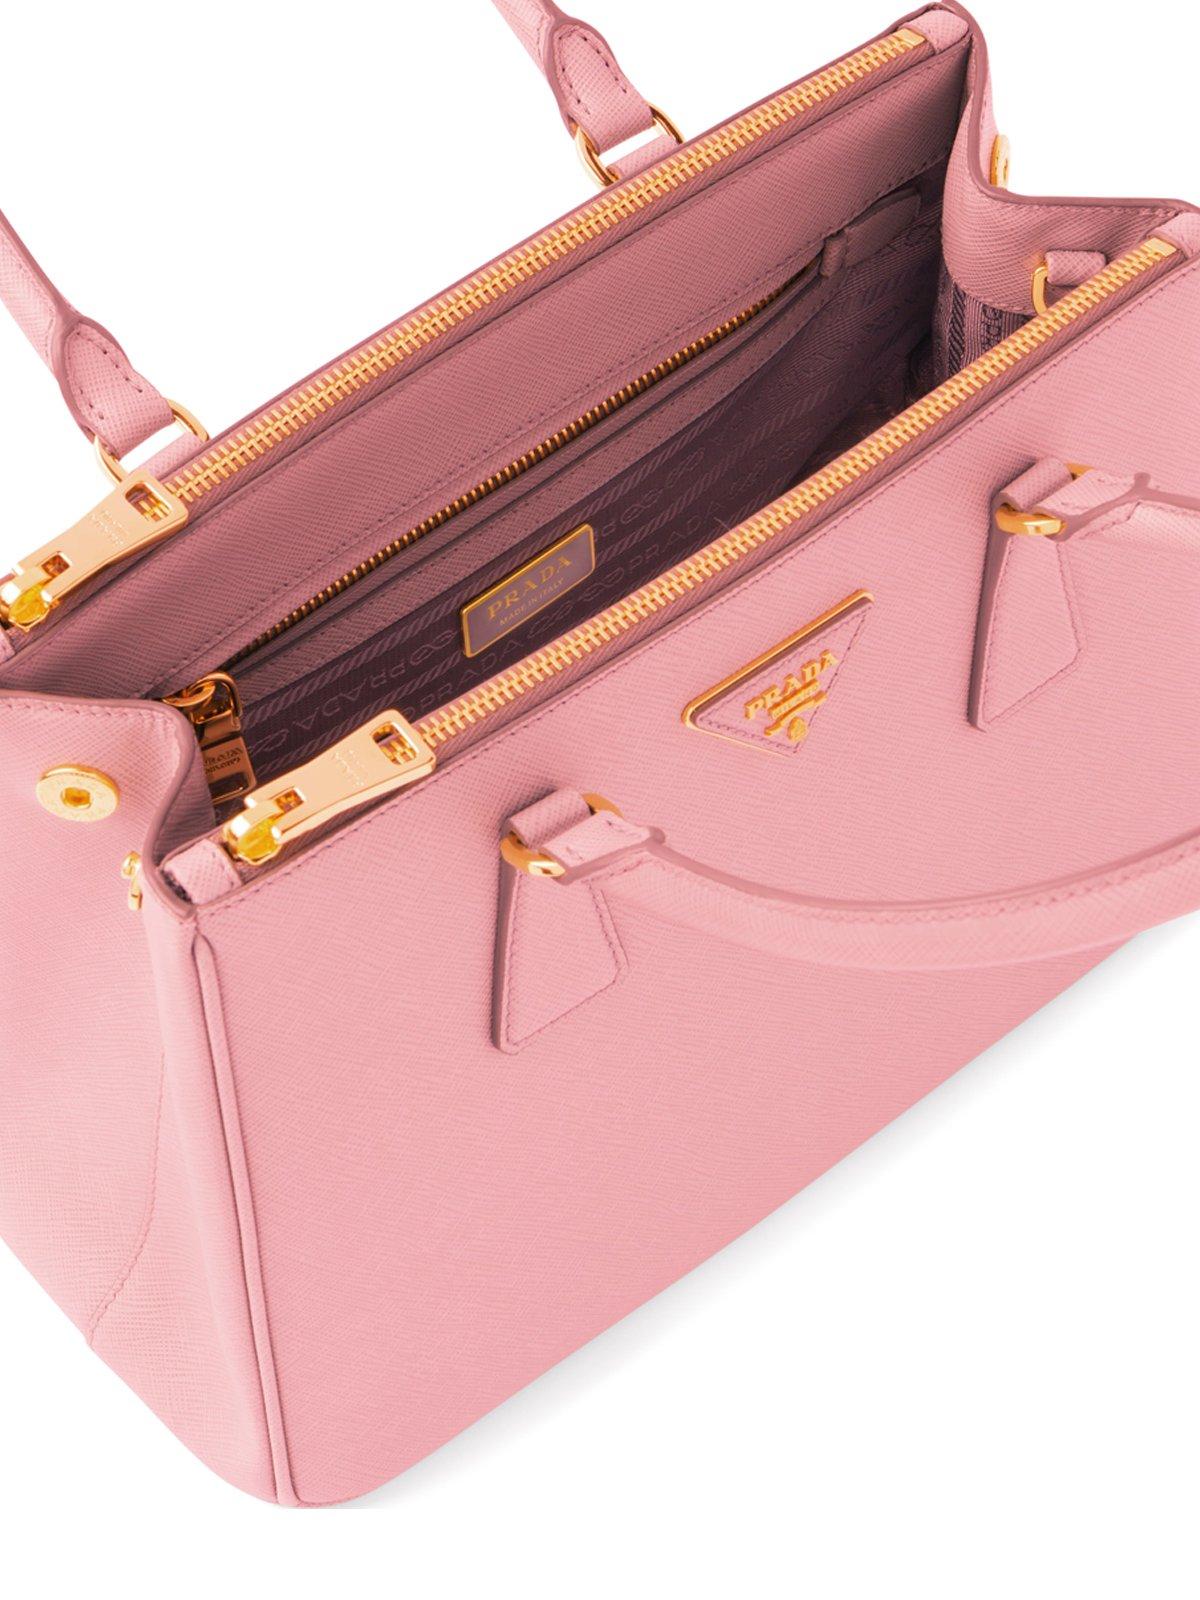 prada saffiano leather mini bag pink